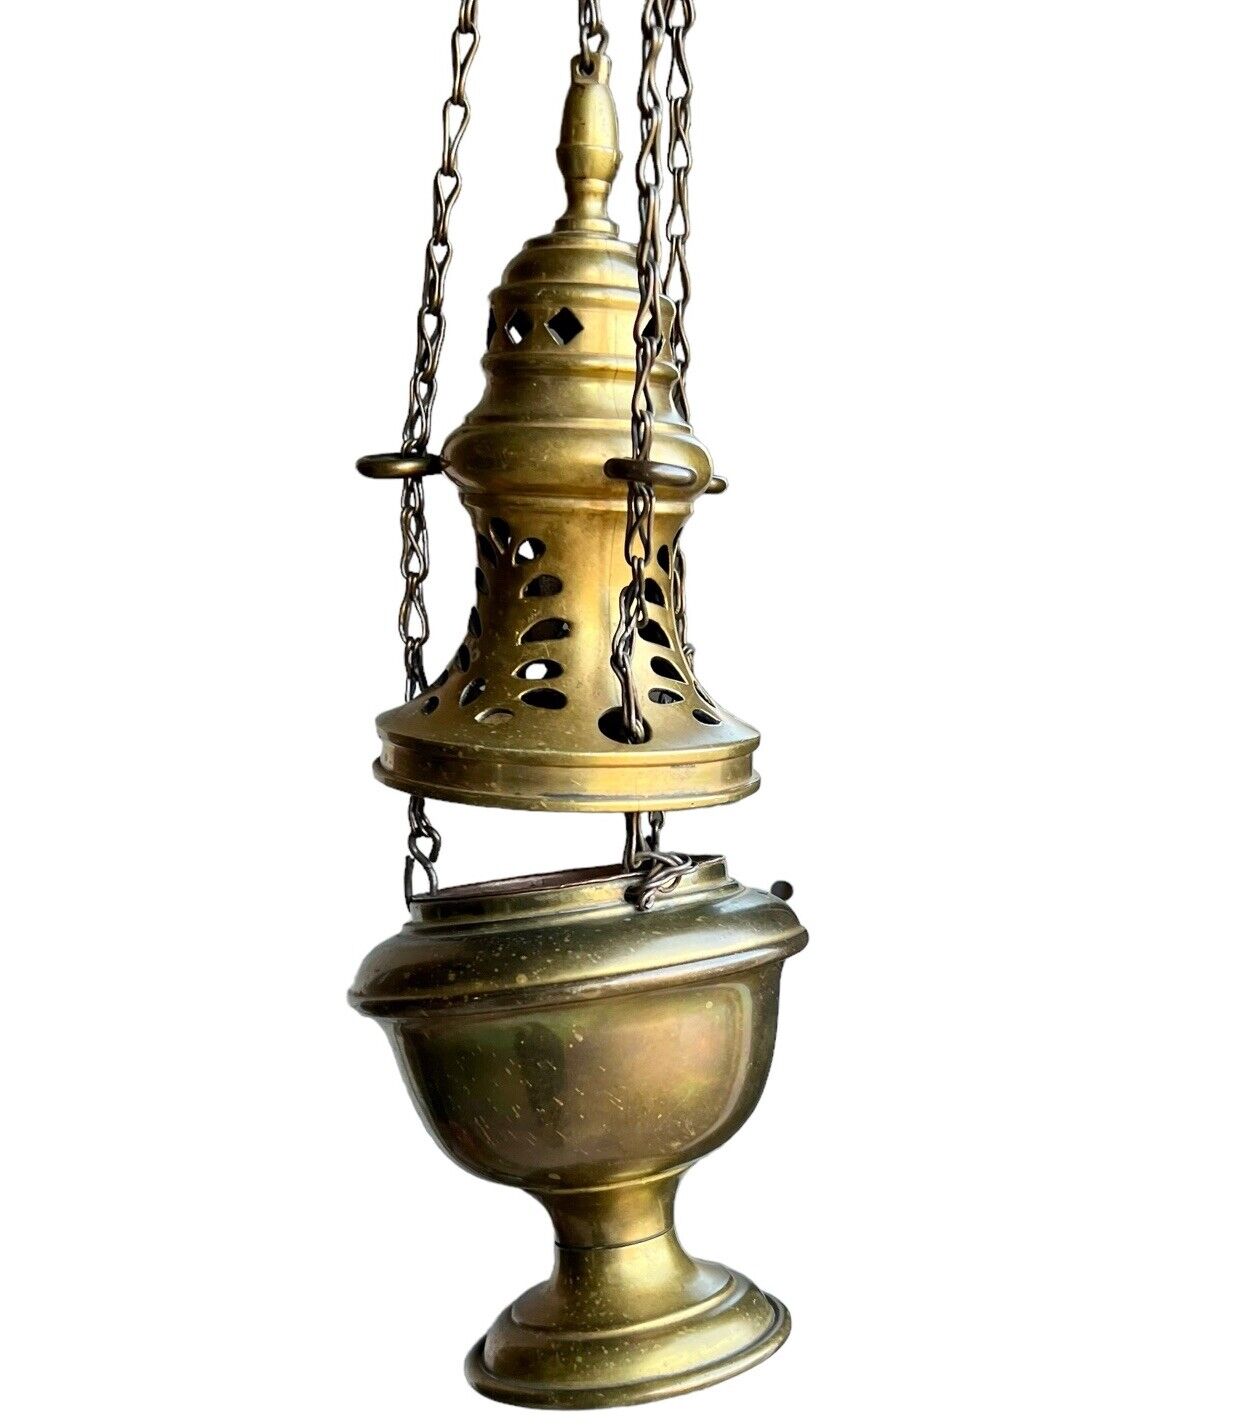 Antique Brass Triple Chain Church Censer, Incense Burner, 19th century Artifacts